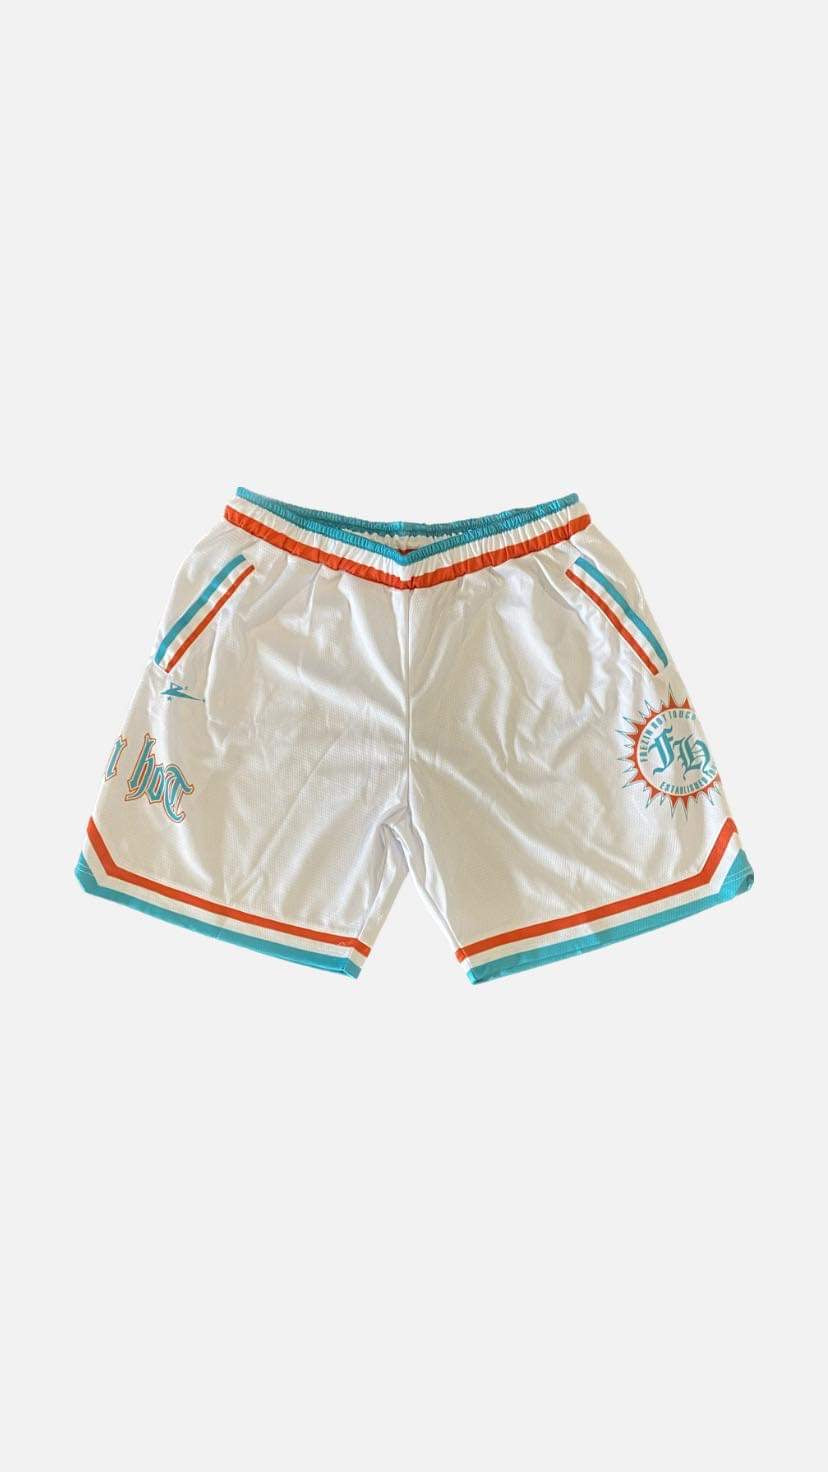 Frezin Sub Miami BBall Shorts